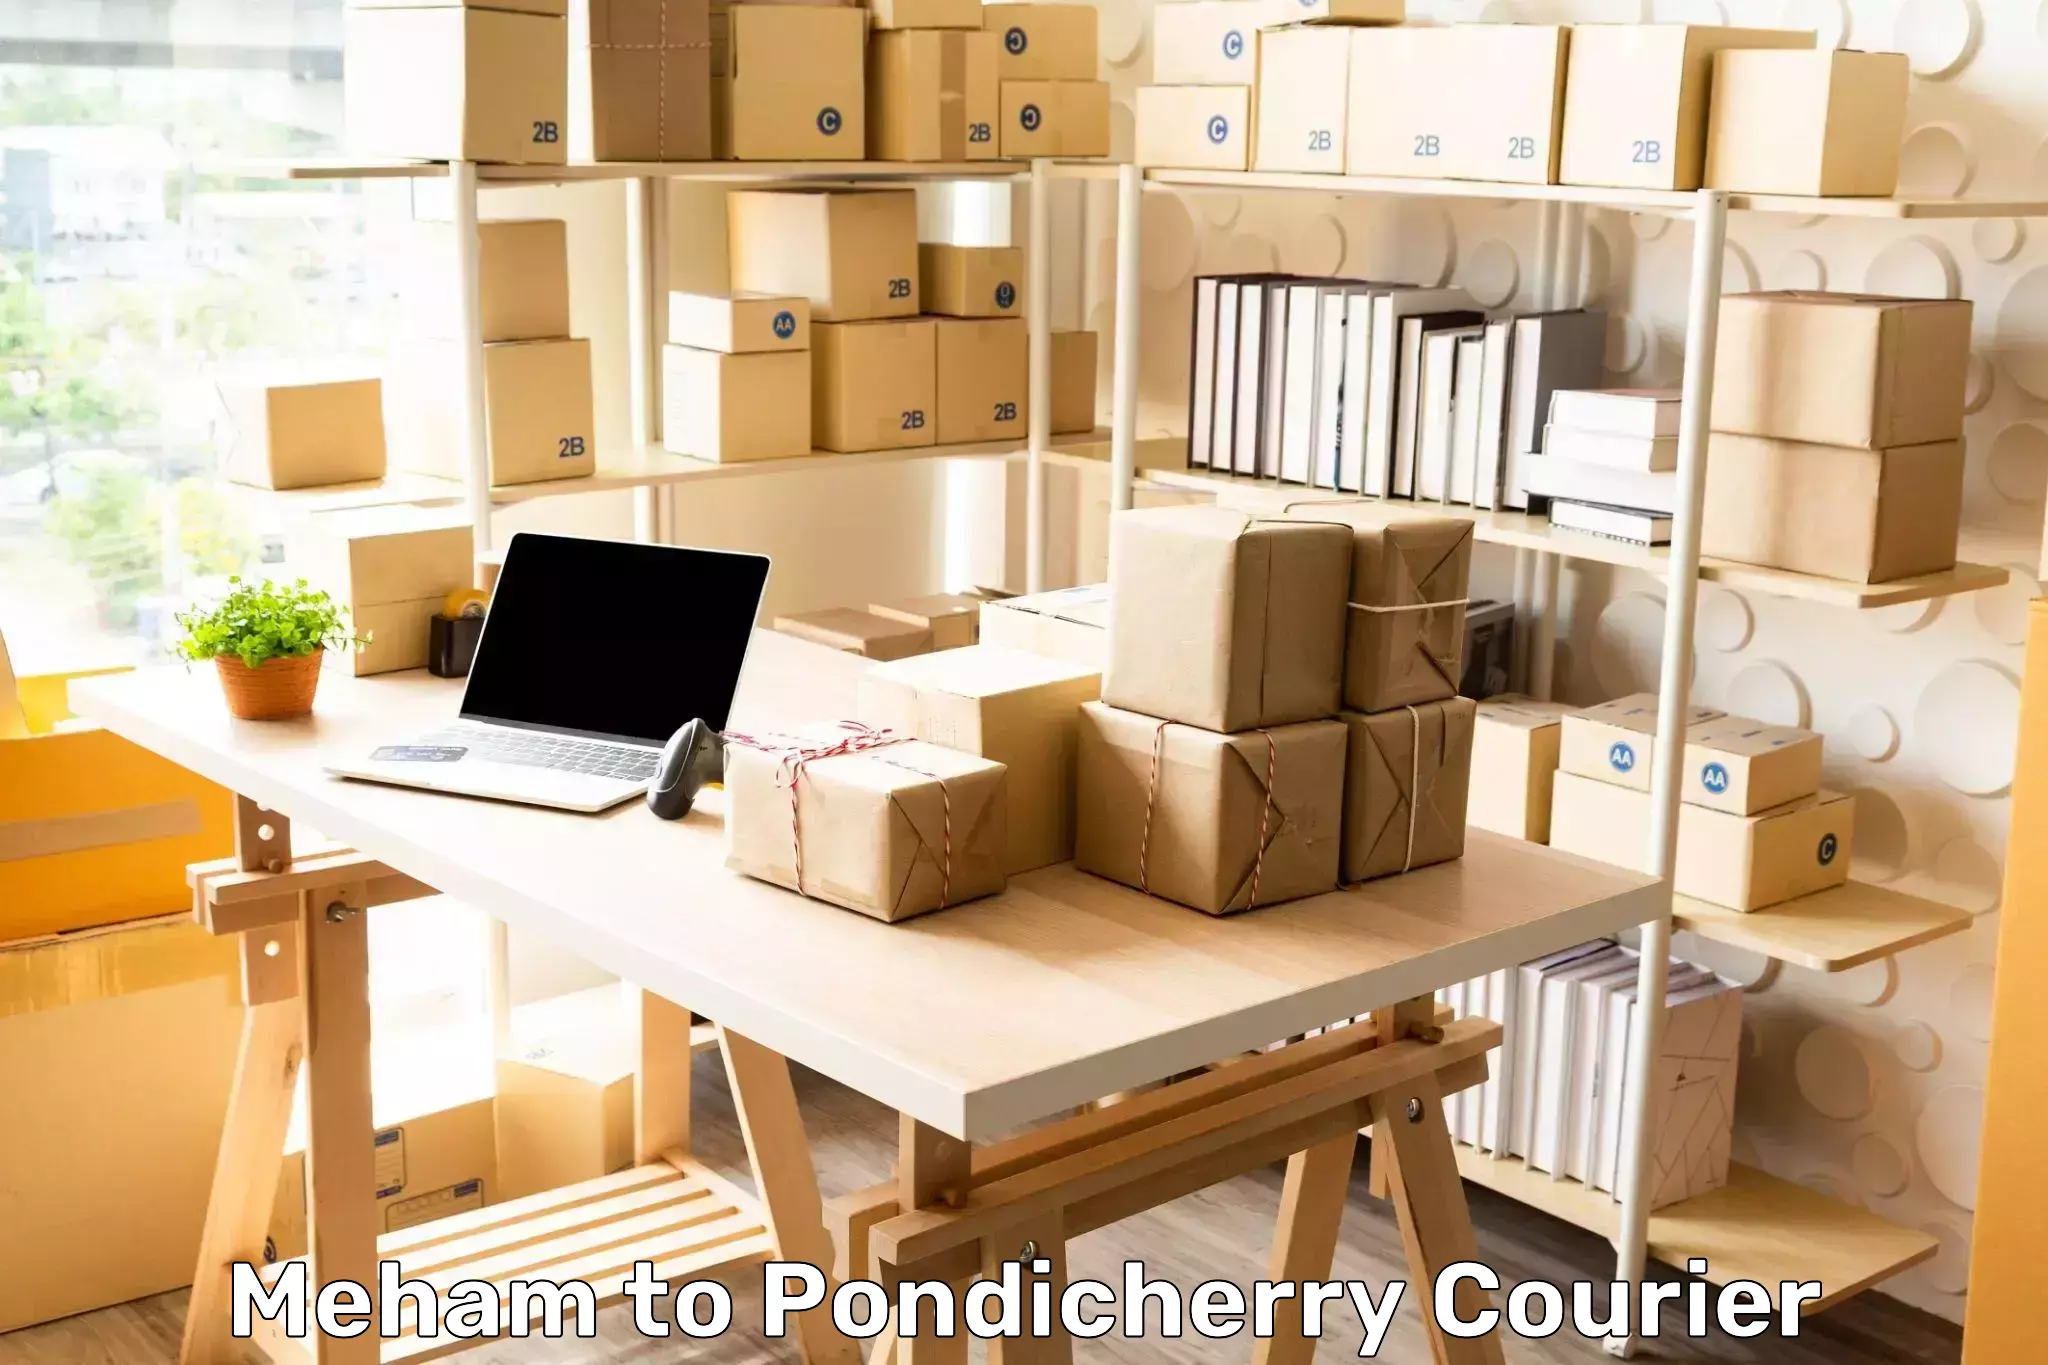 Courier service partnerships Meham to Pondicherry